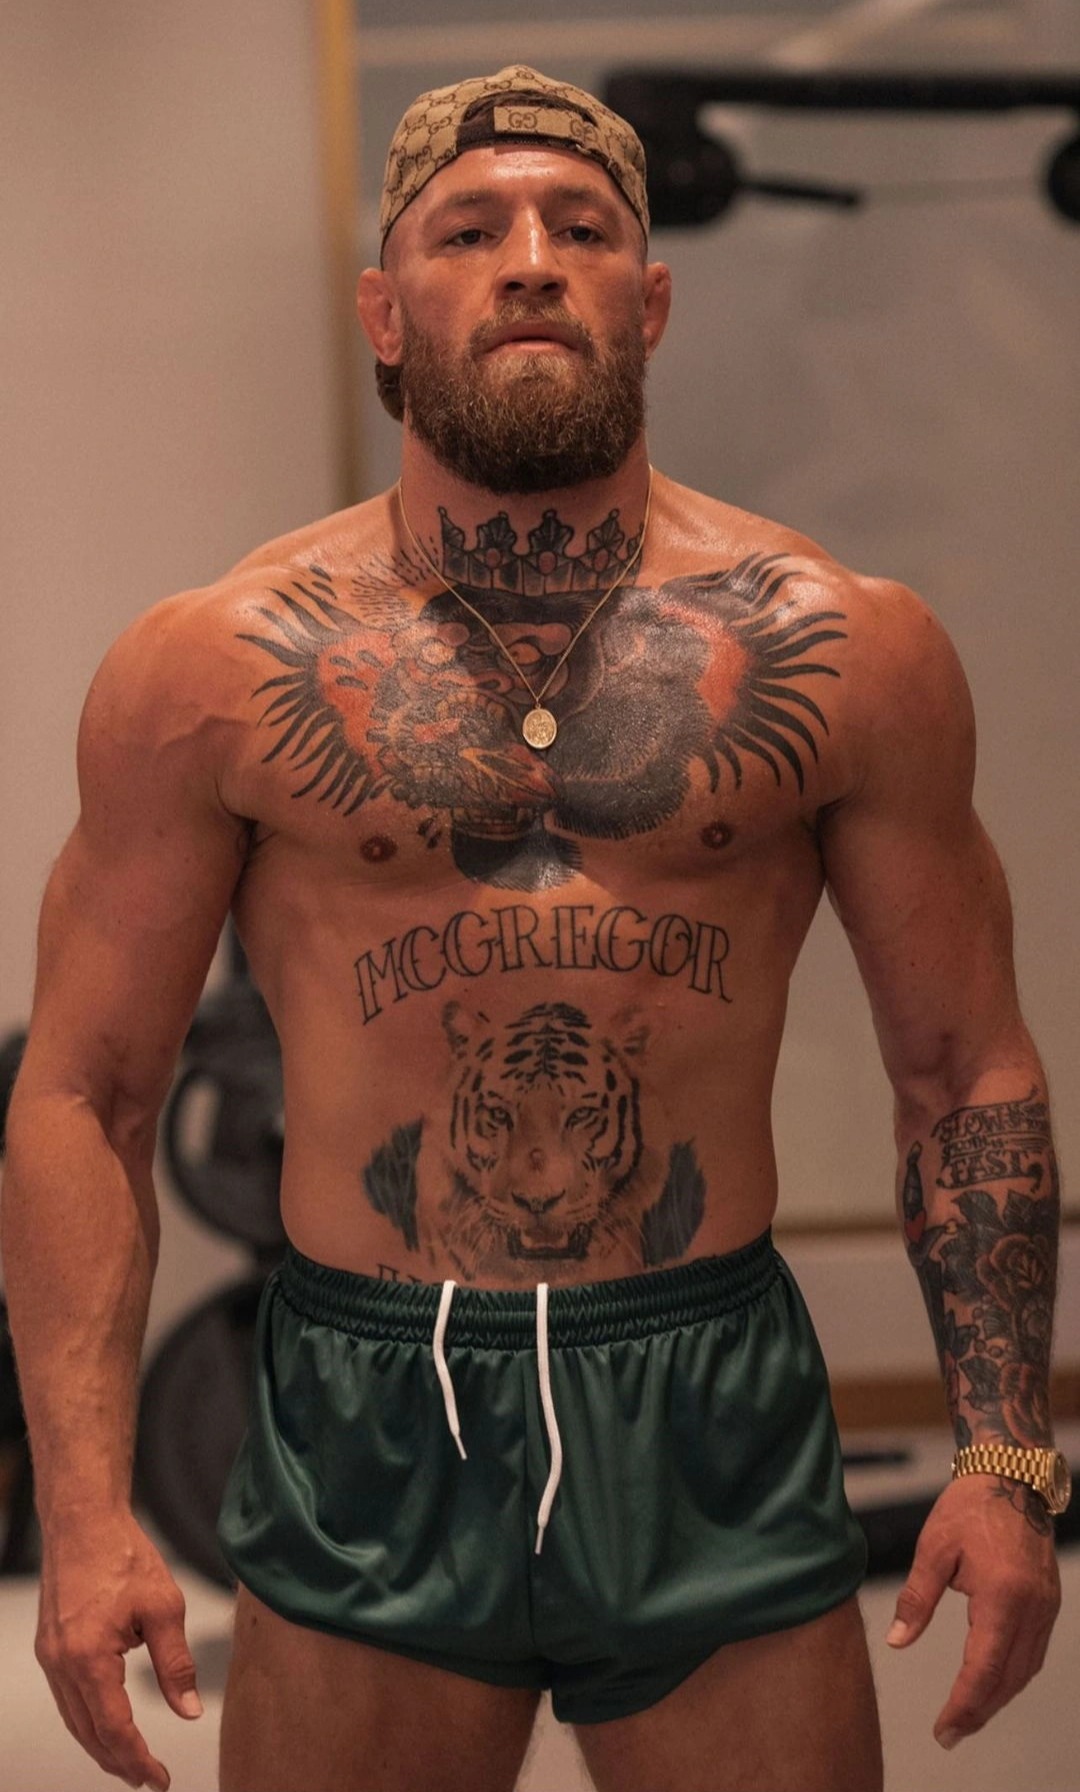 UFC President Dana White stifles'silly talk' of Conor McGregor rematching Max Holloway, as the Irishman is still hurt'